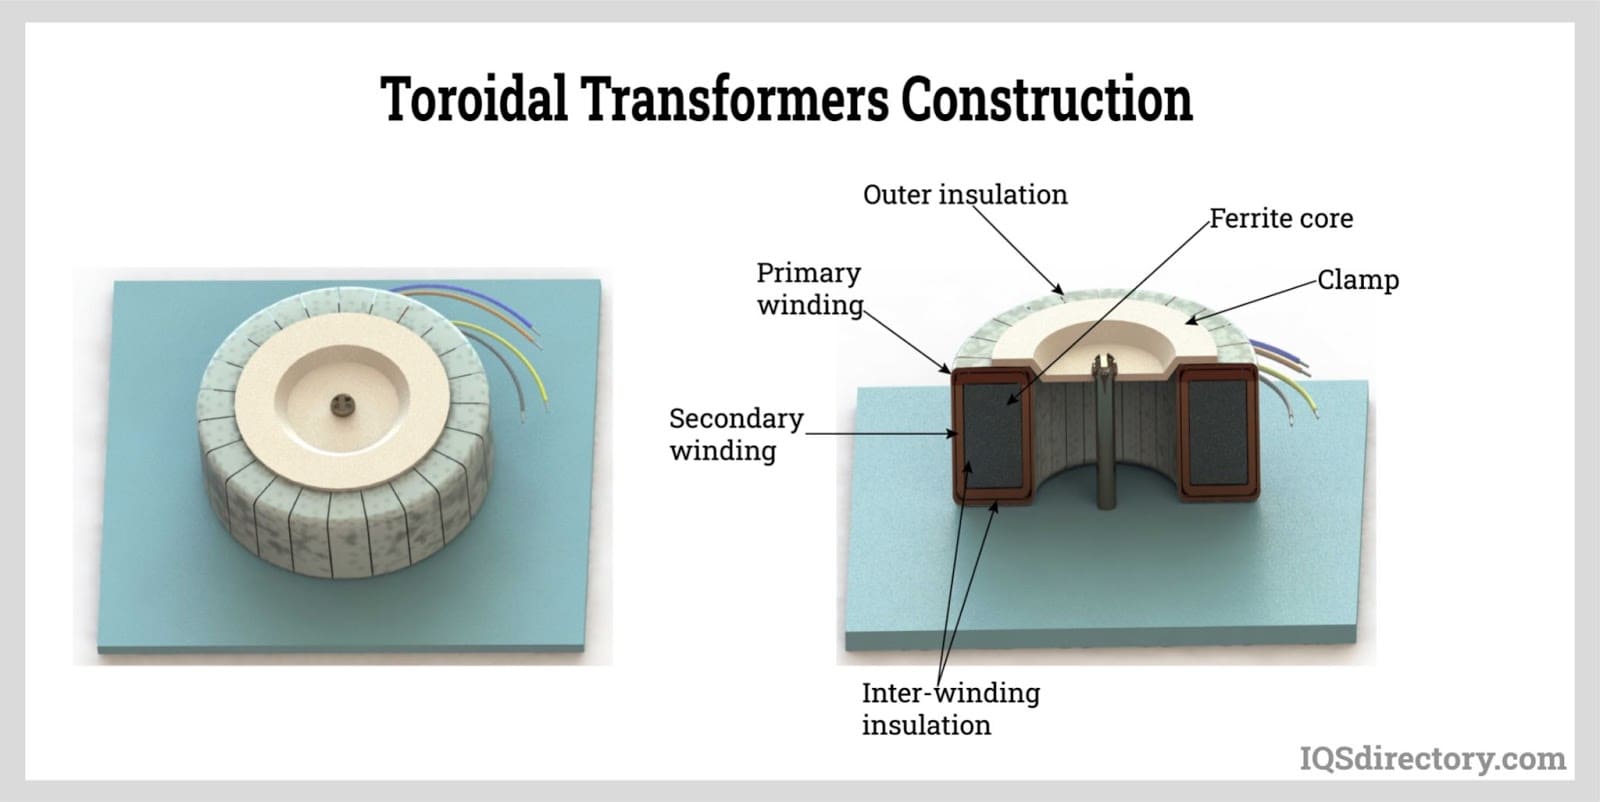 Toroidal Transformers Construction